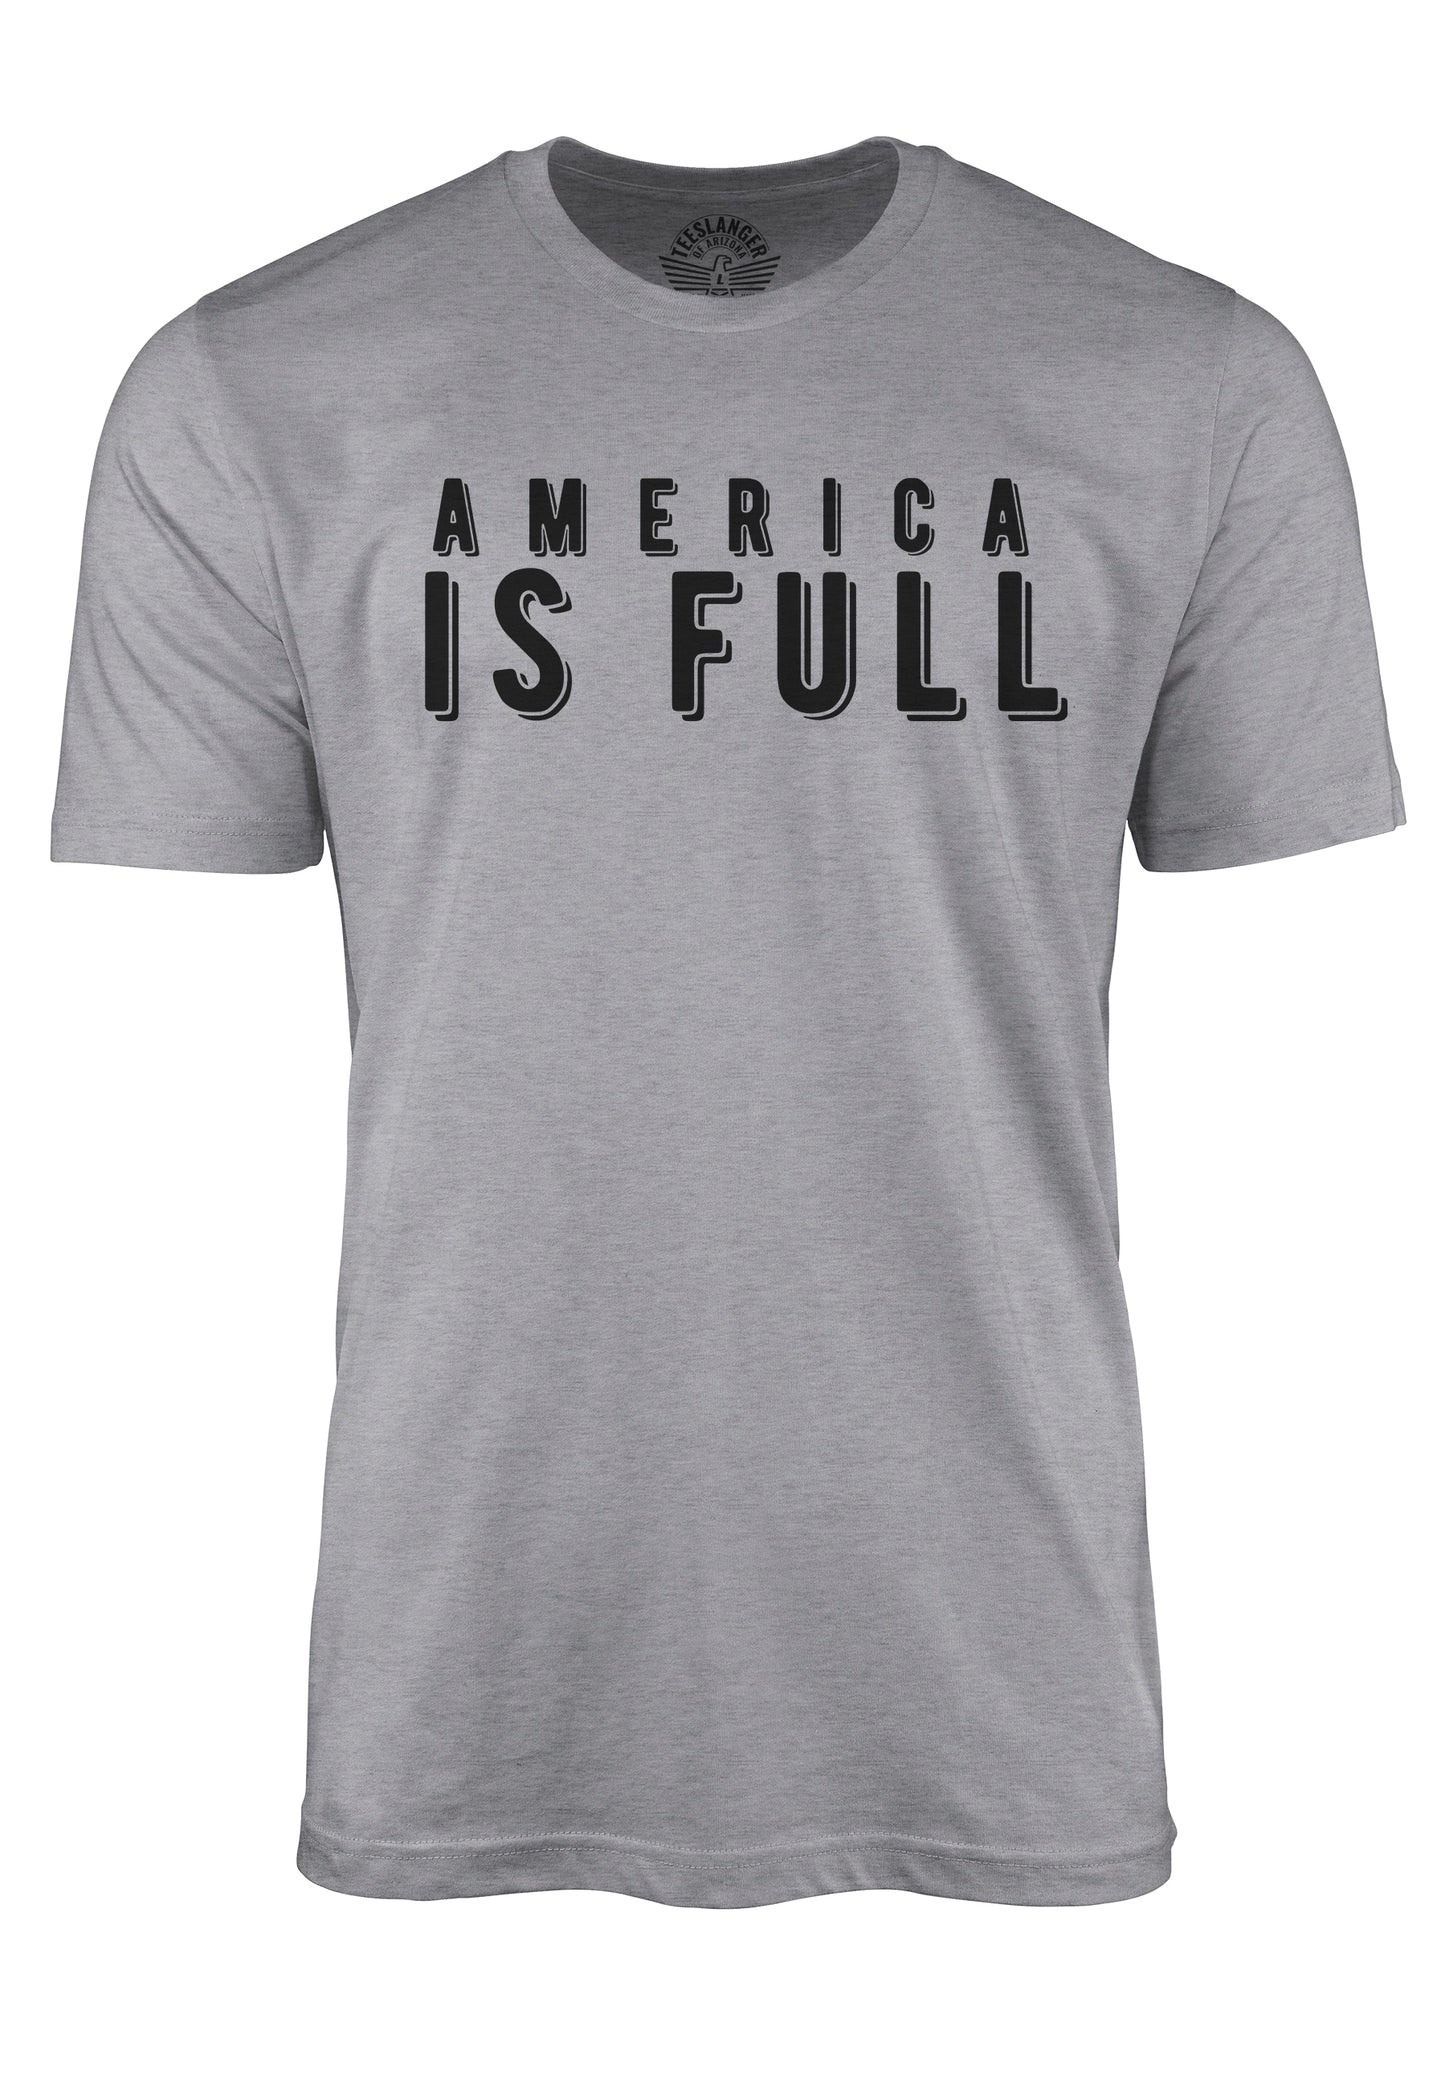 Unisex America is Full tee shirt